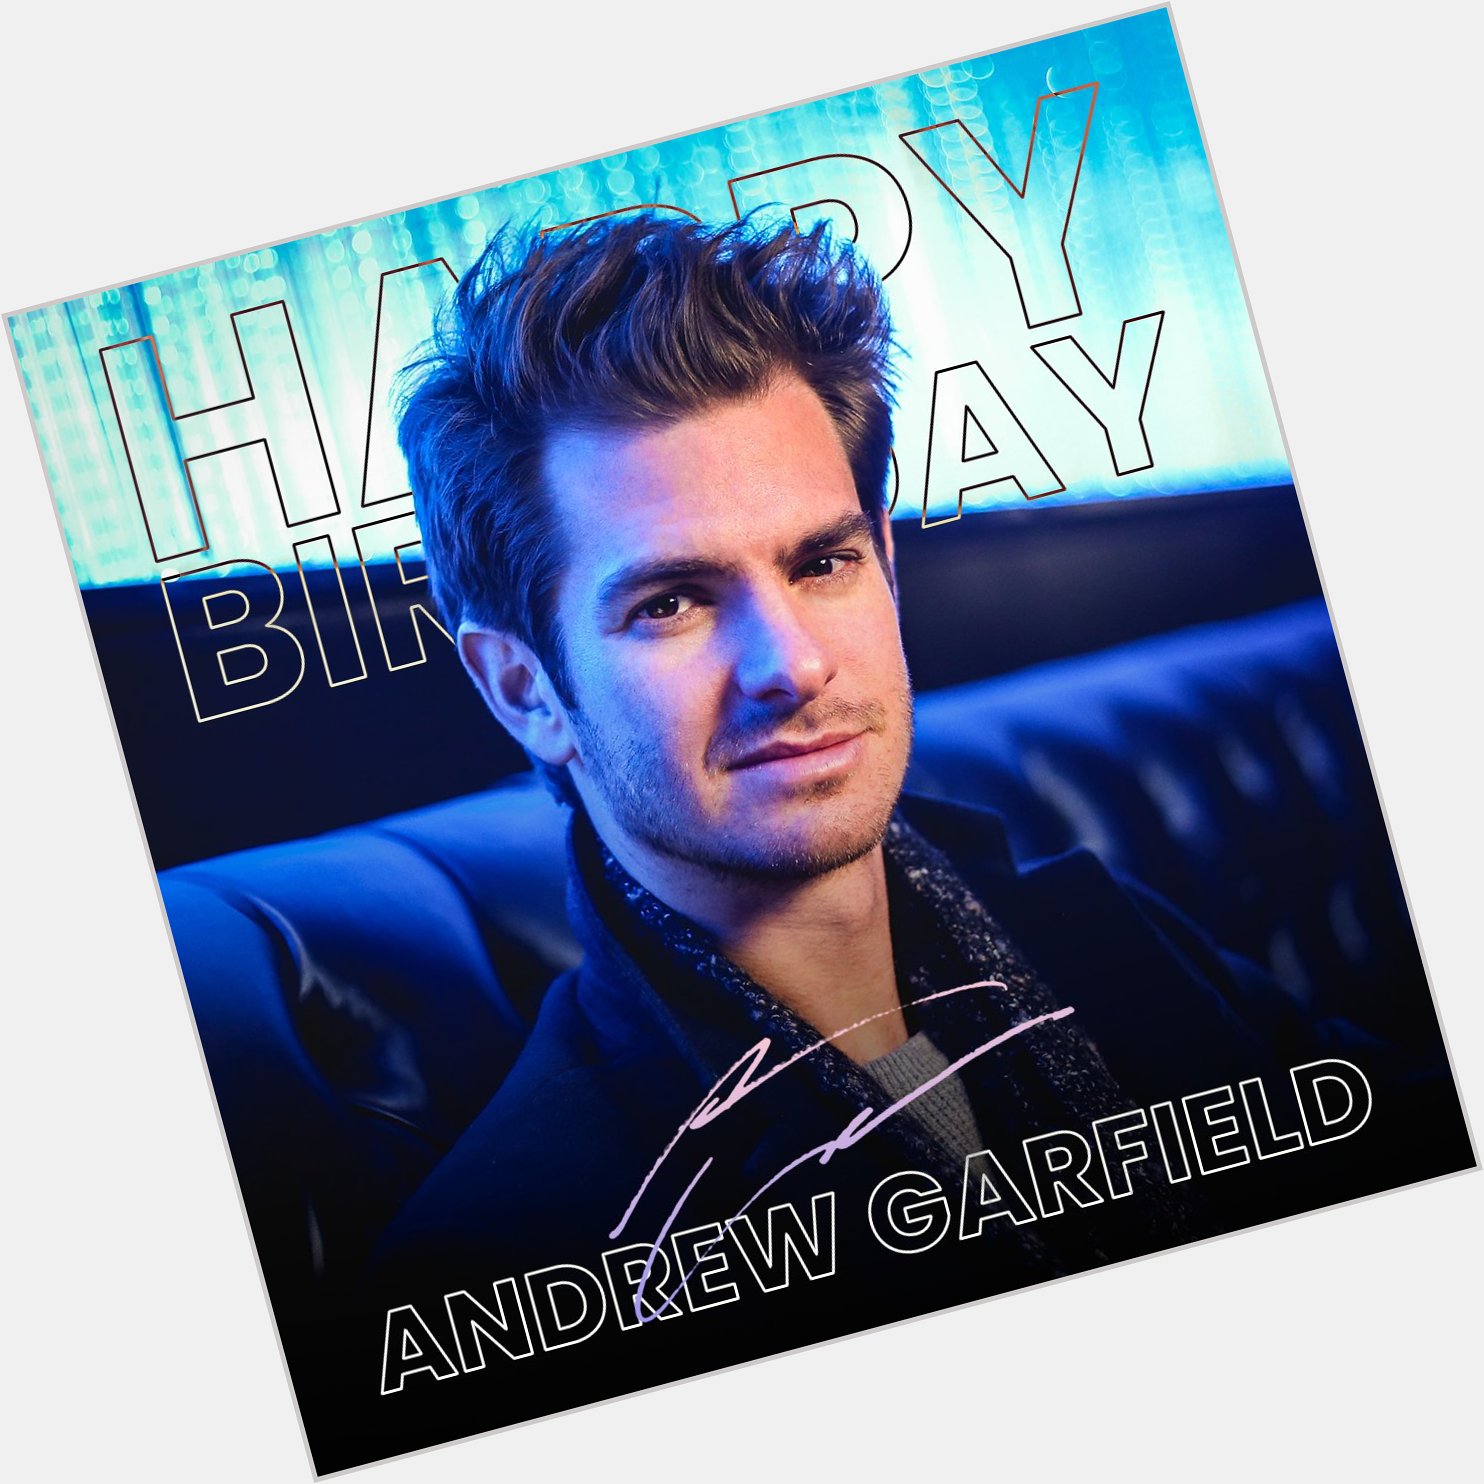 Happy Birthday to Andrew Garfield! What\s your favorite Andrew Garfield film? 